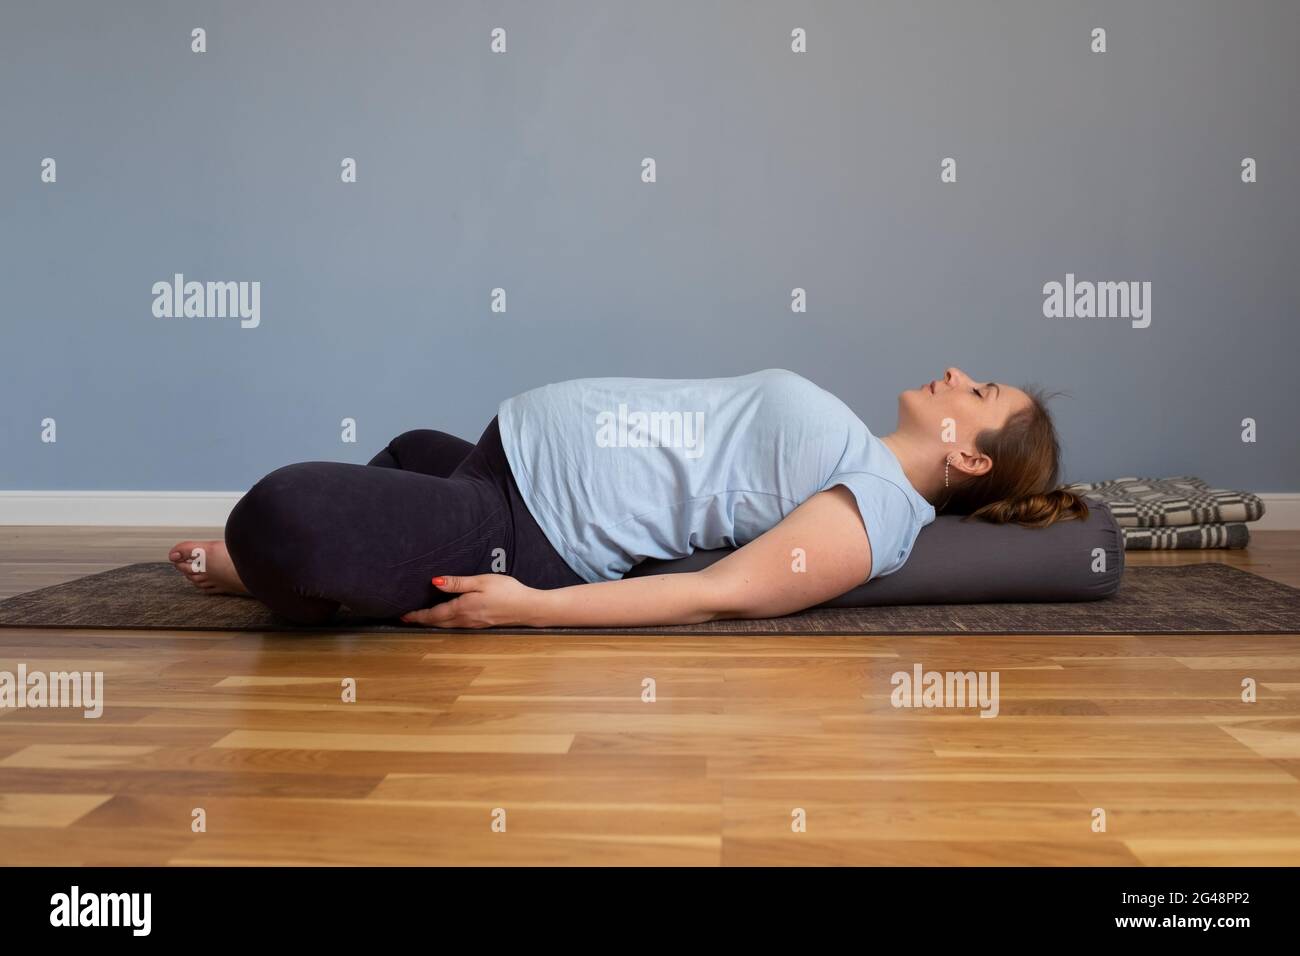 Schwanger Frau praktiziert Yoga in Liegestuhl Schmetterling Übung  Stockfotografie - Alamy